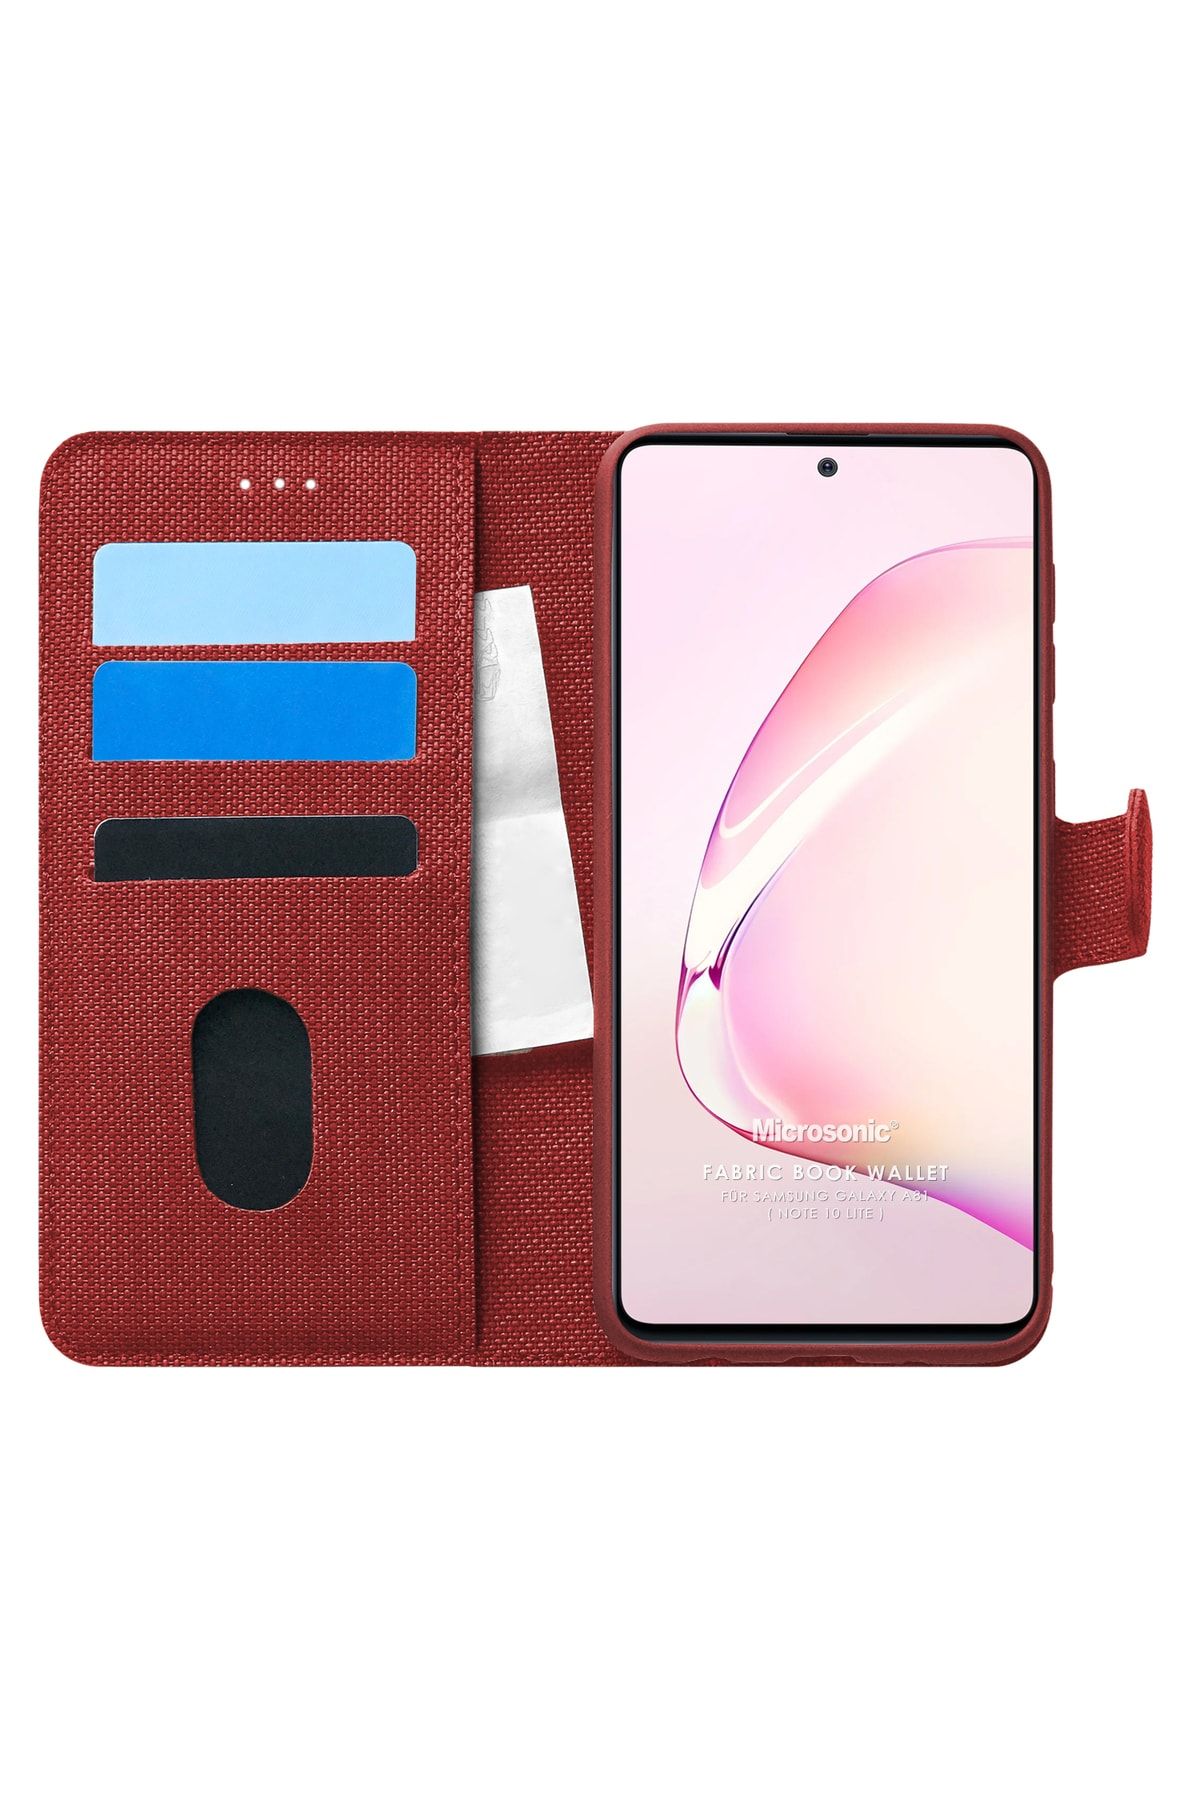 Microsonic Galaxy Note 10 Lite Kılıf Fabric Book Wallet Kırmızı